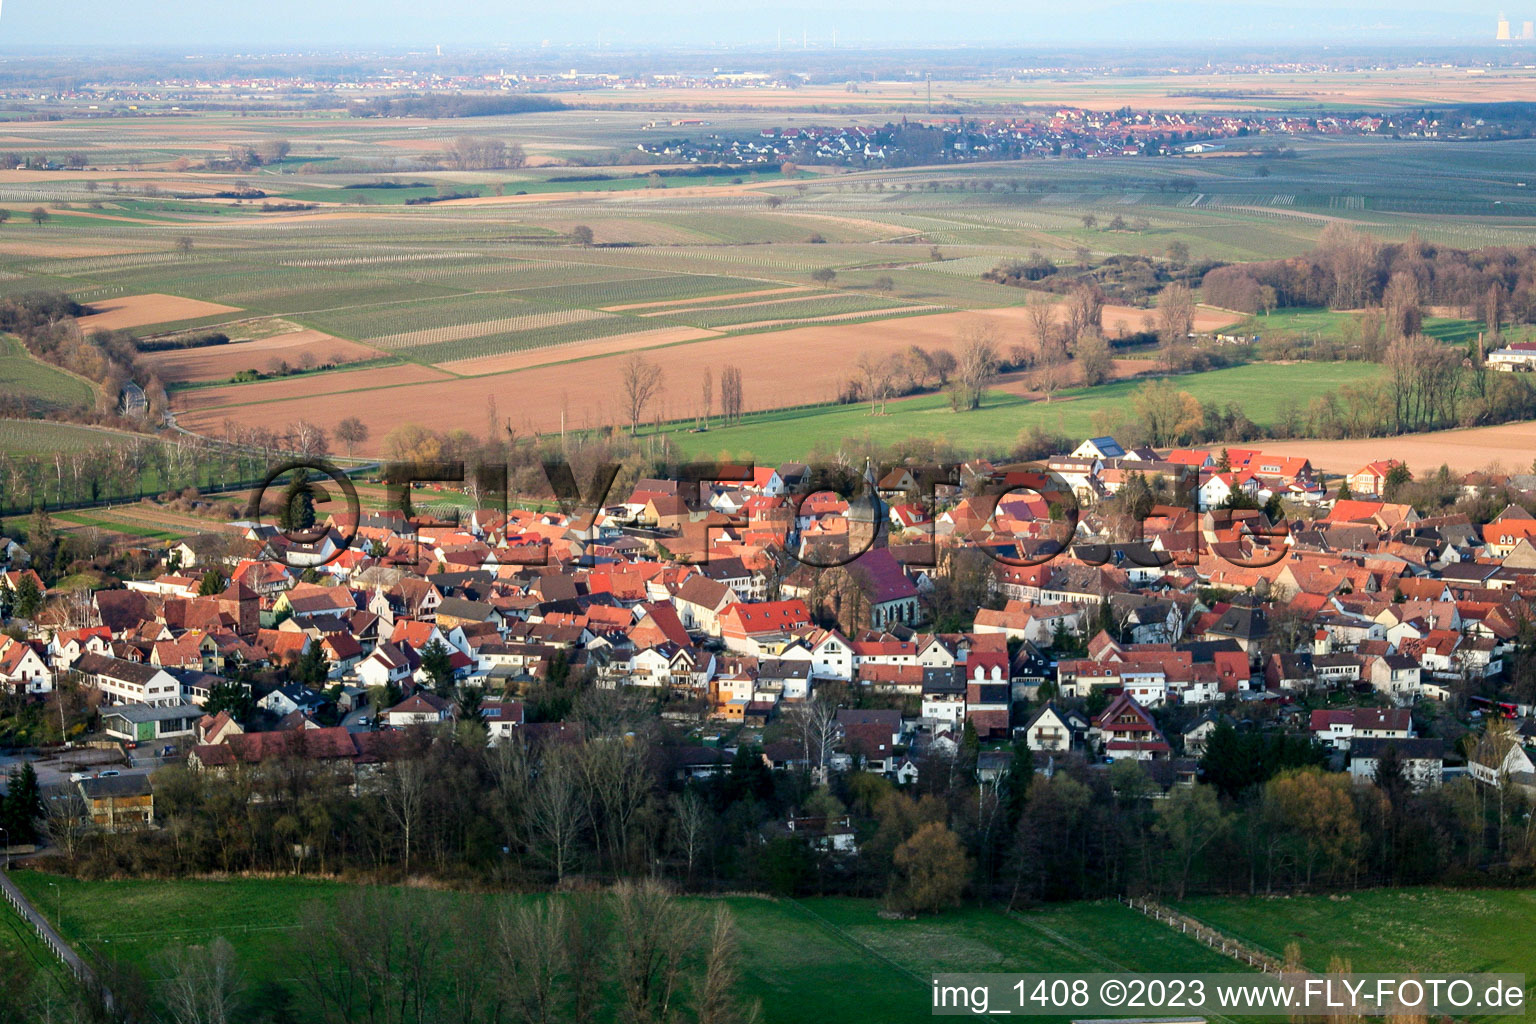 Bird's eye view of District Ingenheim in Billigheim-Ingenheim in the state Rhineland-Palatinate, Germany